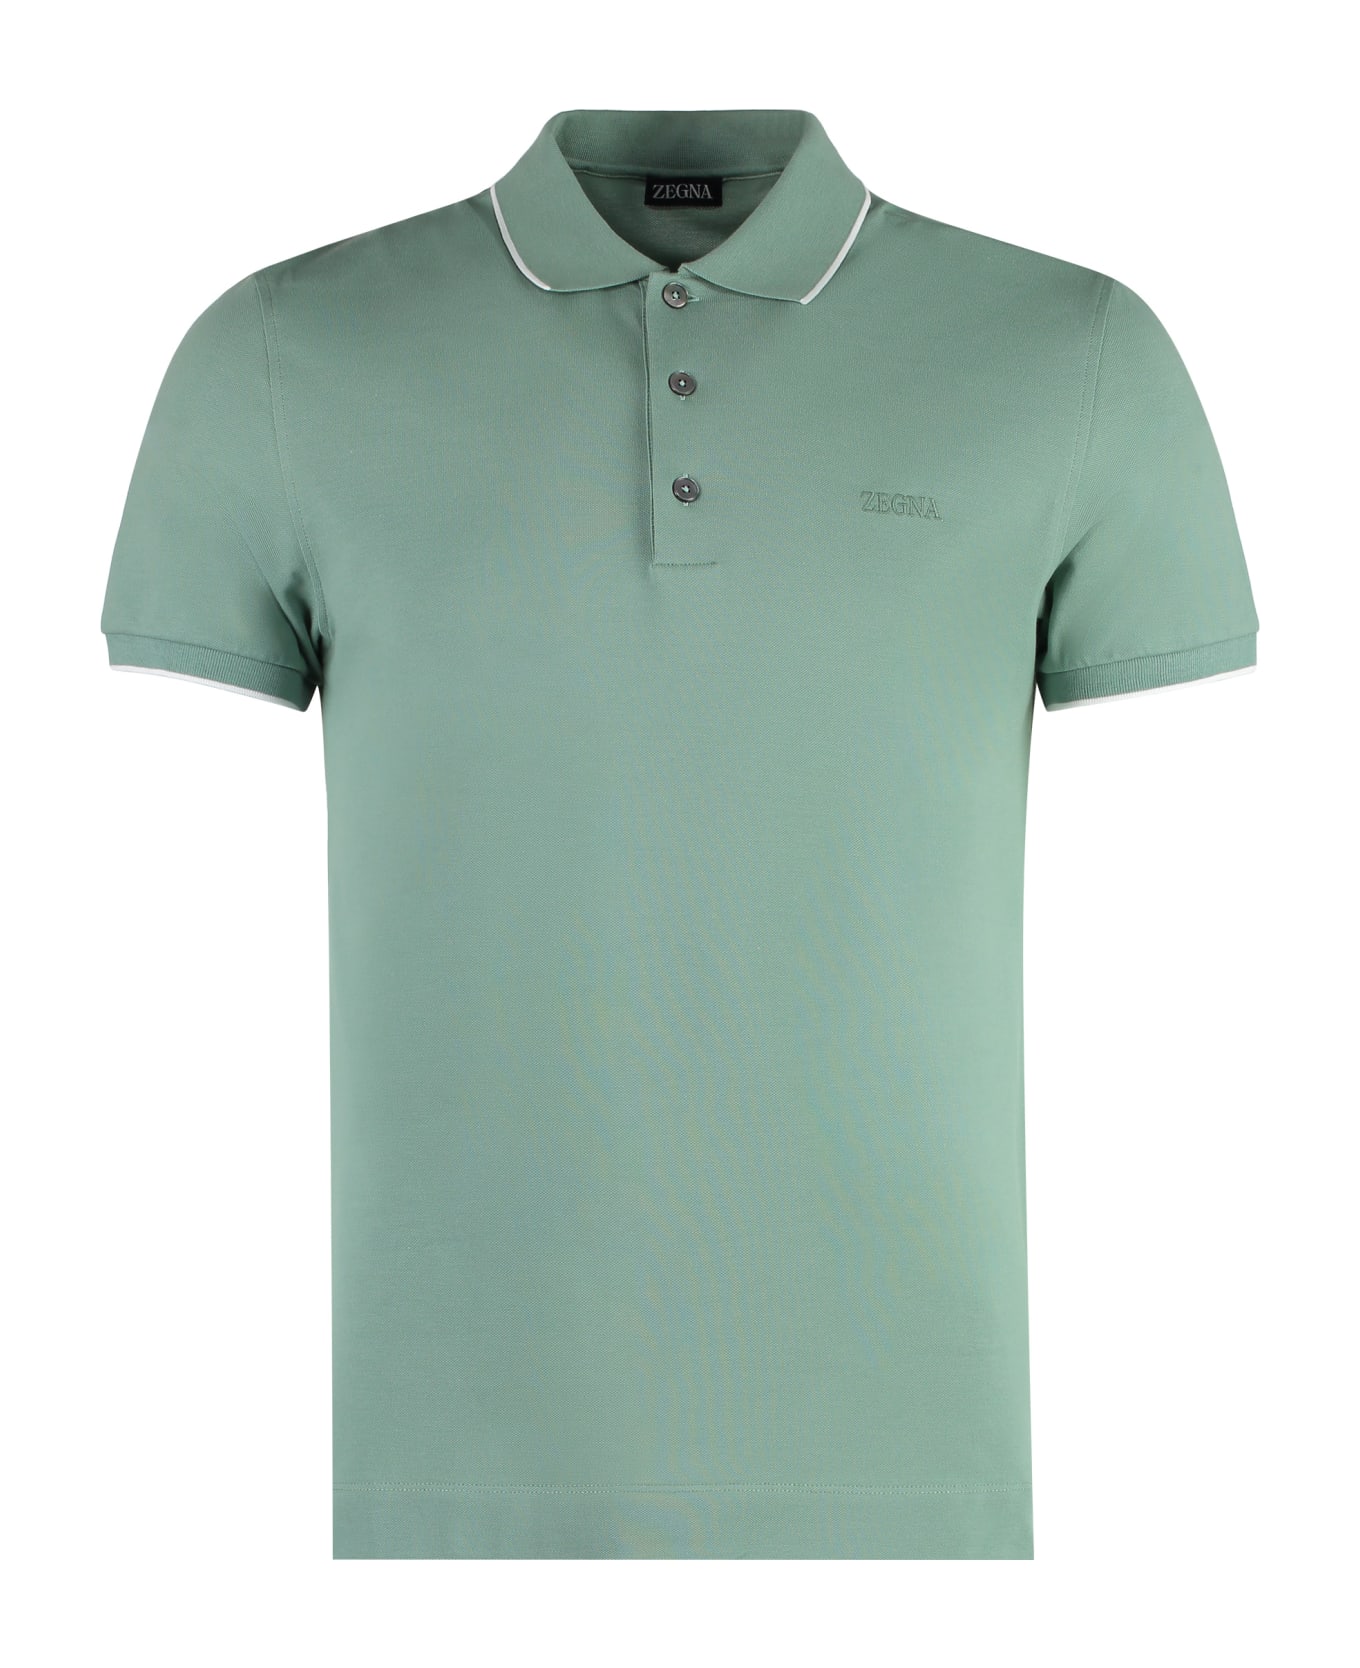 Zegna Short Sleeve Cotton Polo Shirt - green ポロシャツ